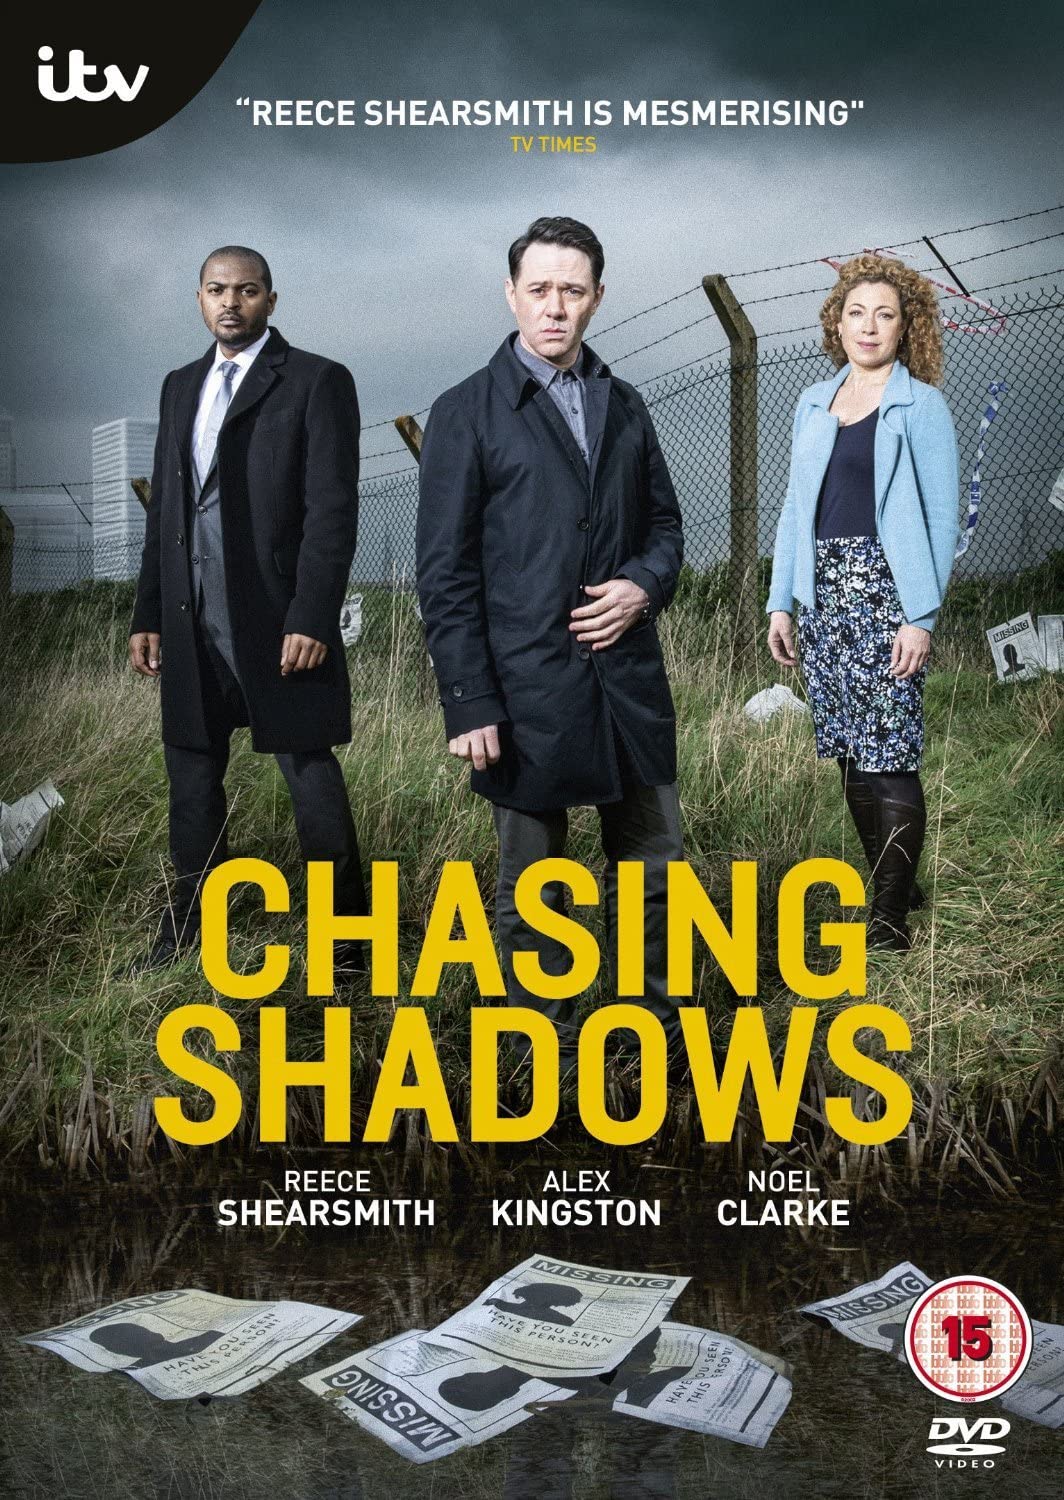 Chasing Shadows [Drama ] [2014] [DVD]